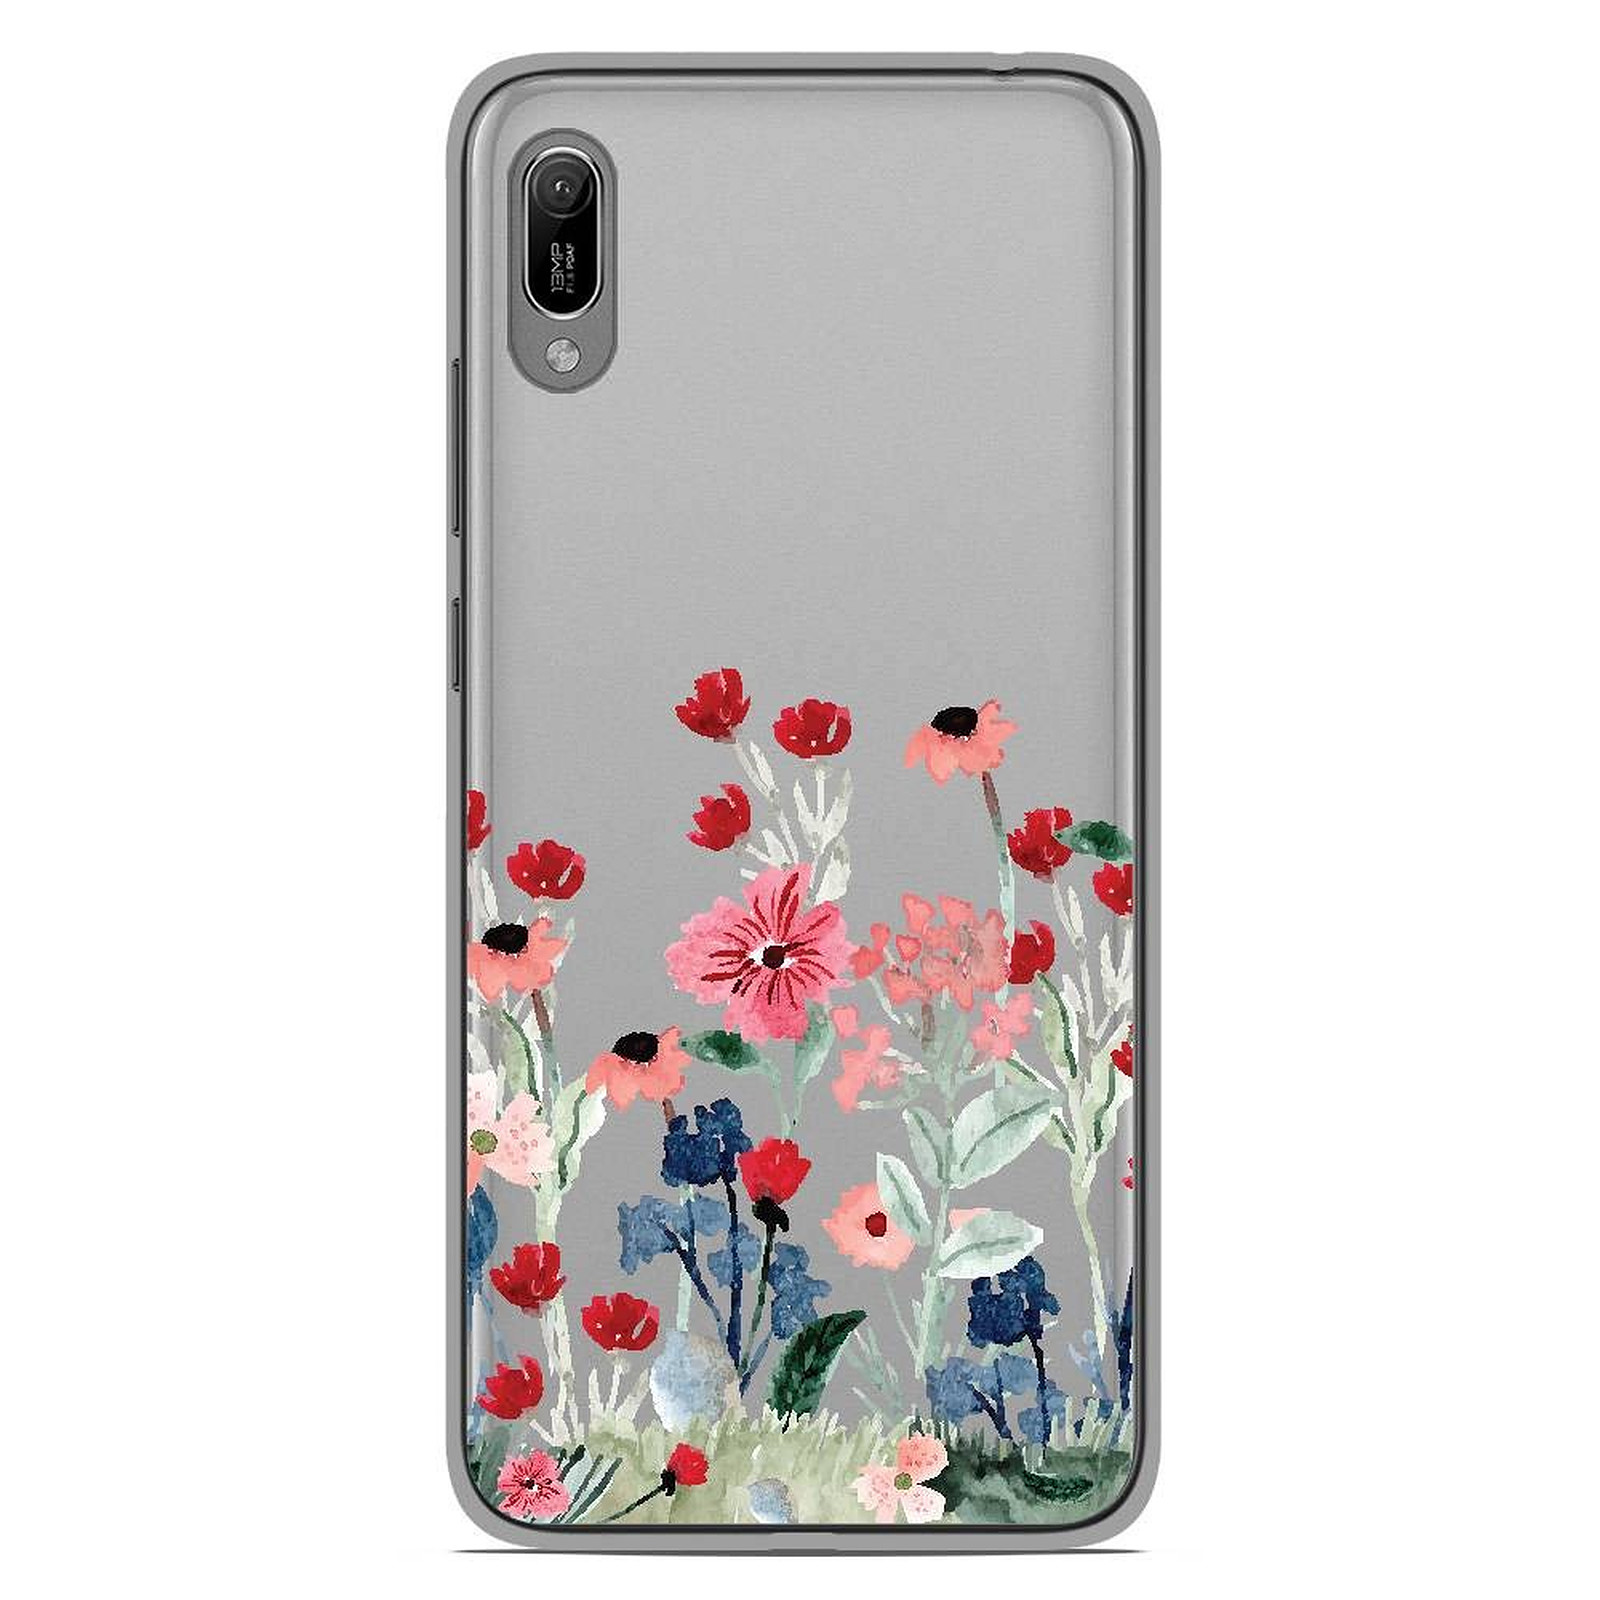 1001 Coques Coque silicone gel Huawei Y6 2019 motif Printemps en fleurs - Coque telephone 1001Coques